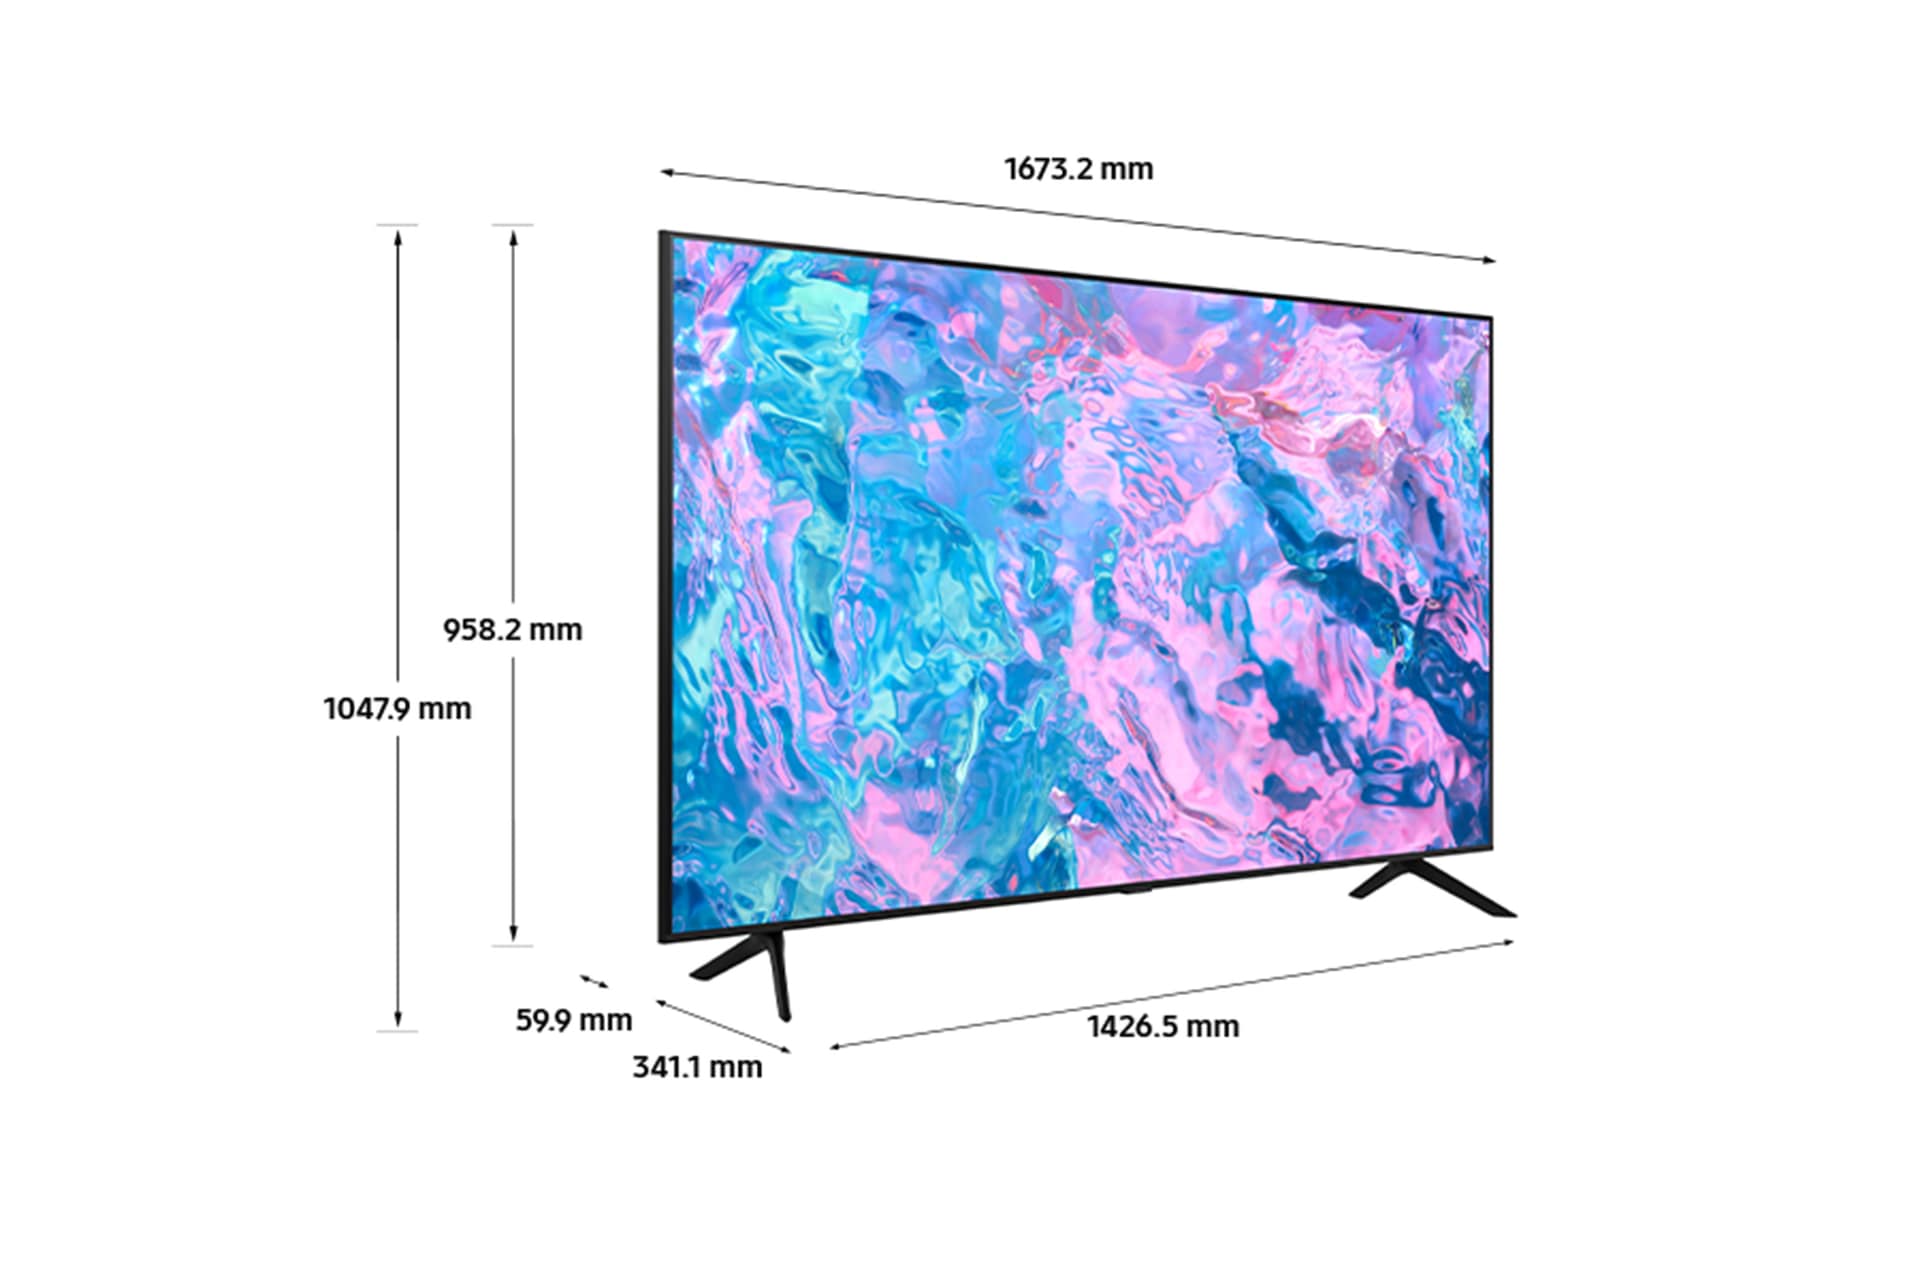 Smart TV Samsung 75 Pulgadas Crystal UHD 4K 2023